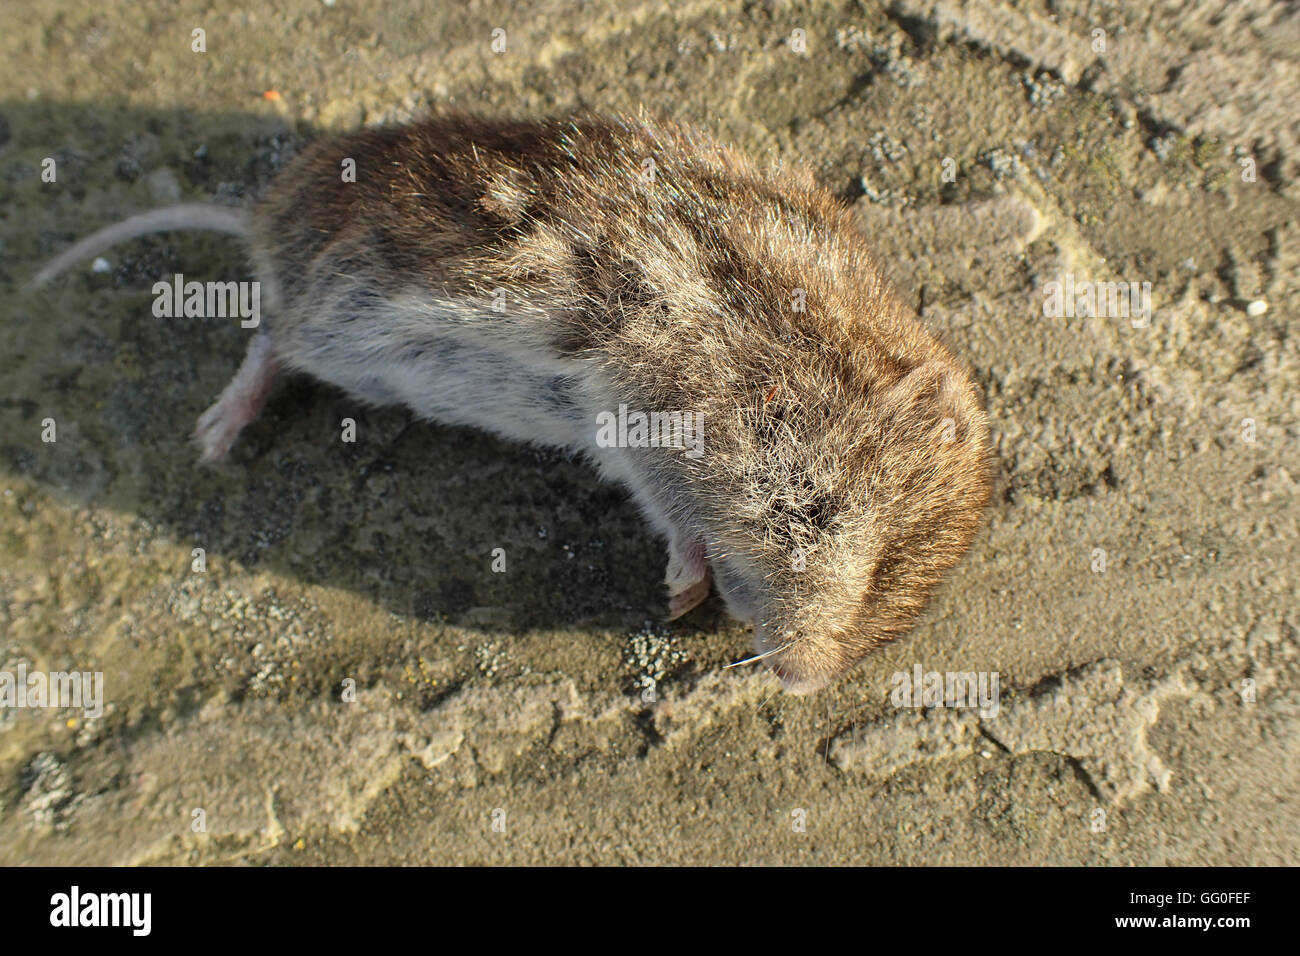 Dead field vole (Microtus agrestis) on a limestone paving slab Stock Photo